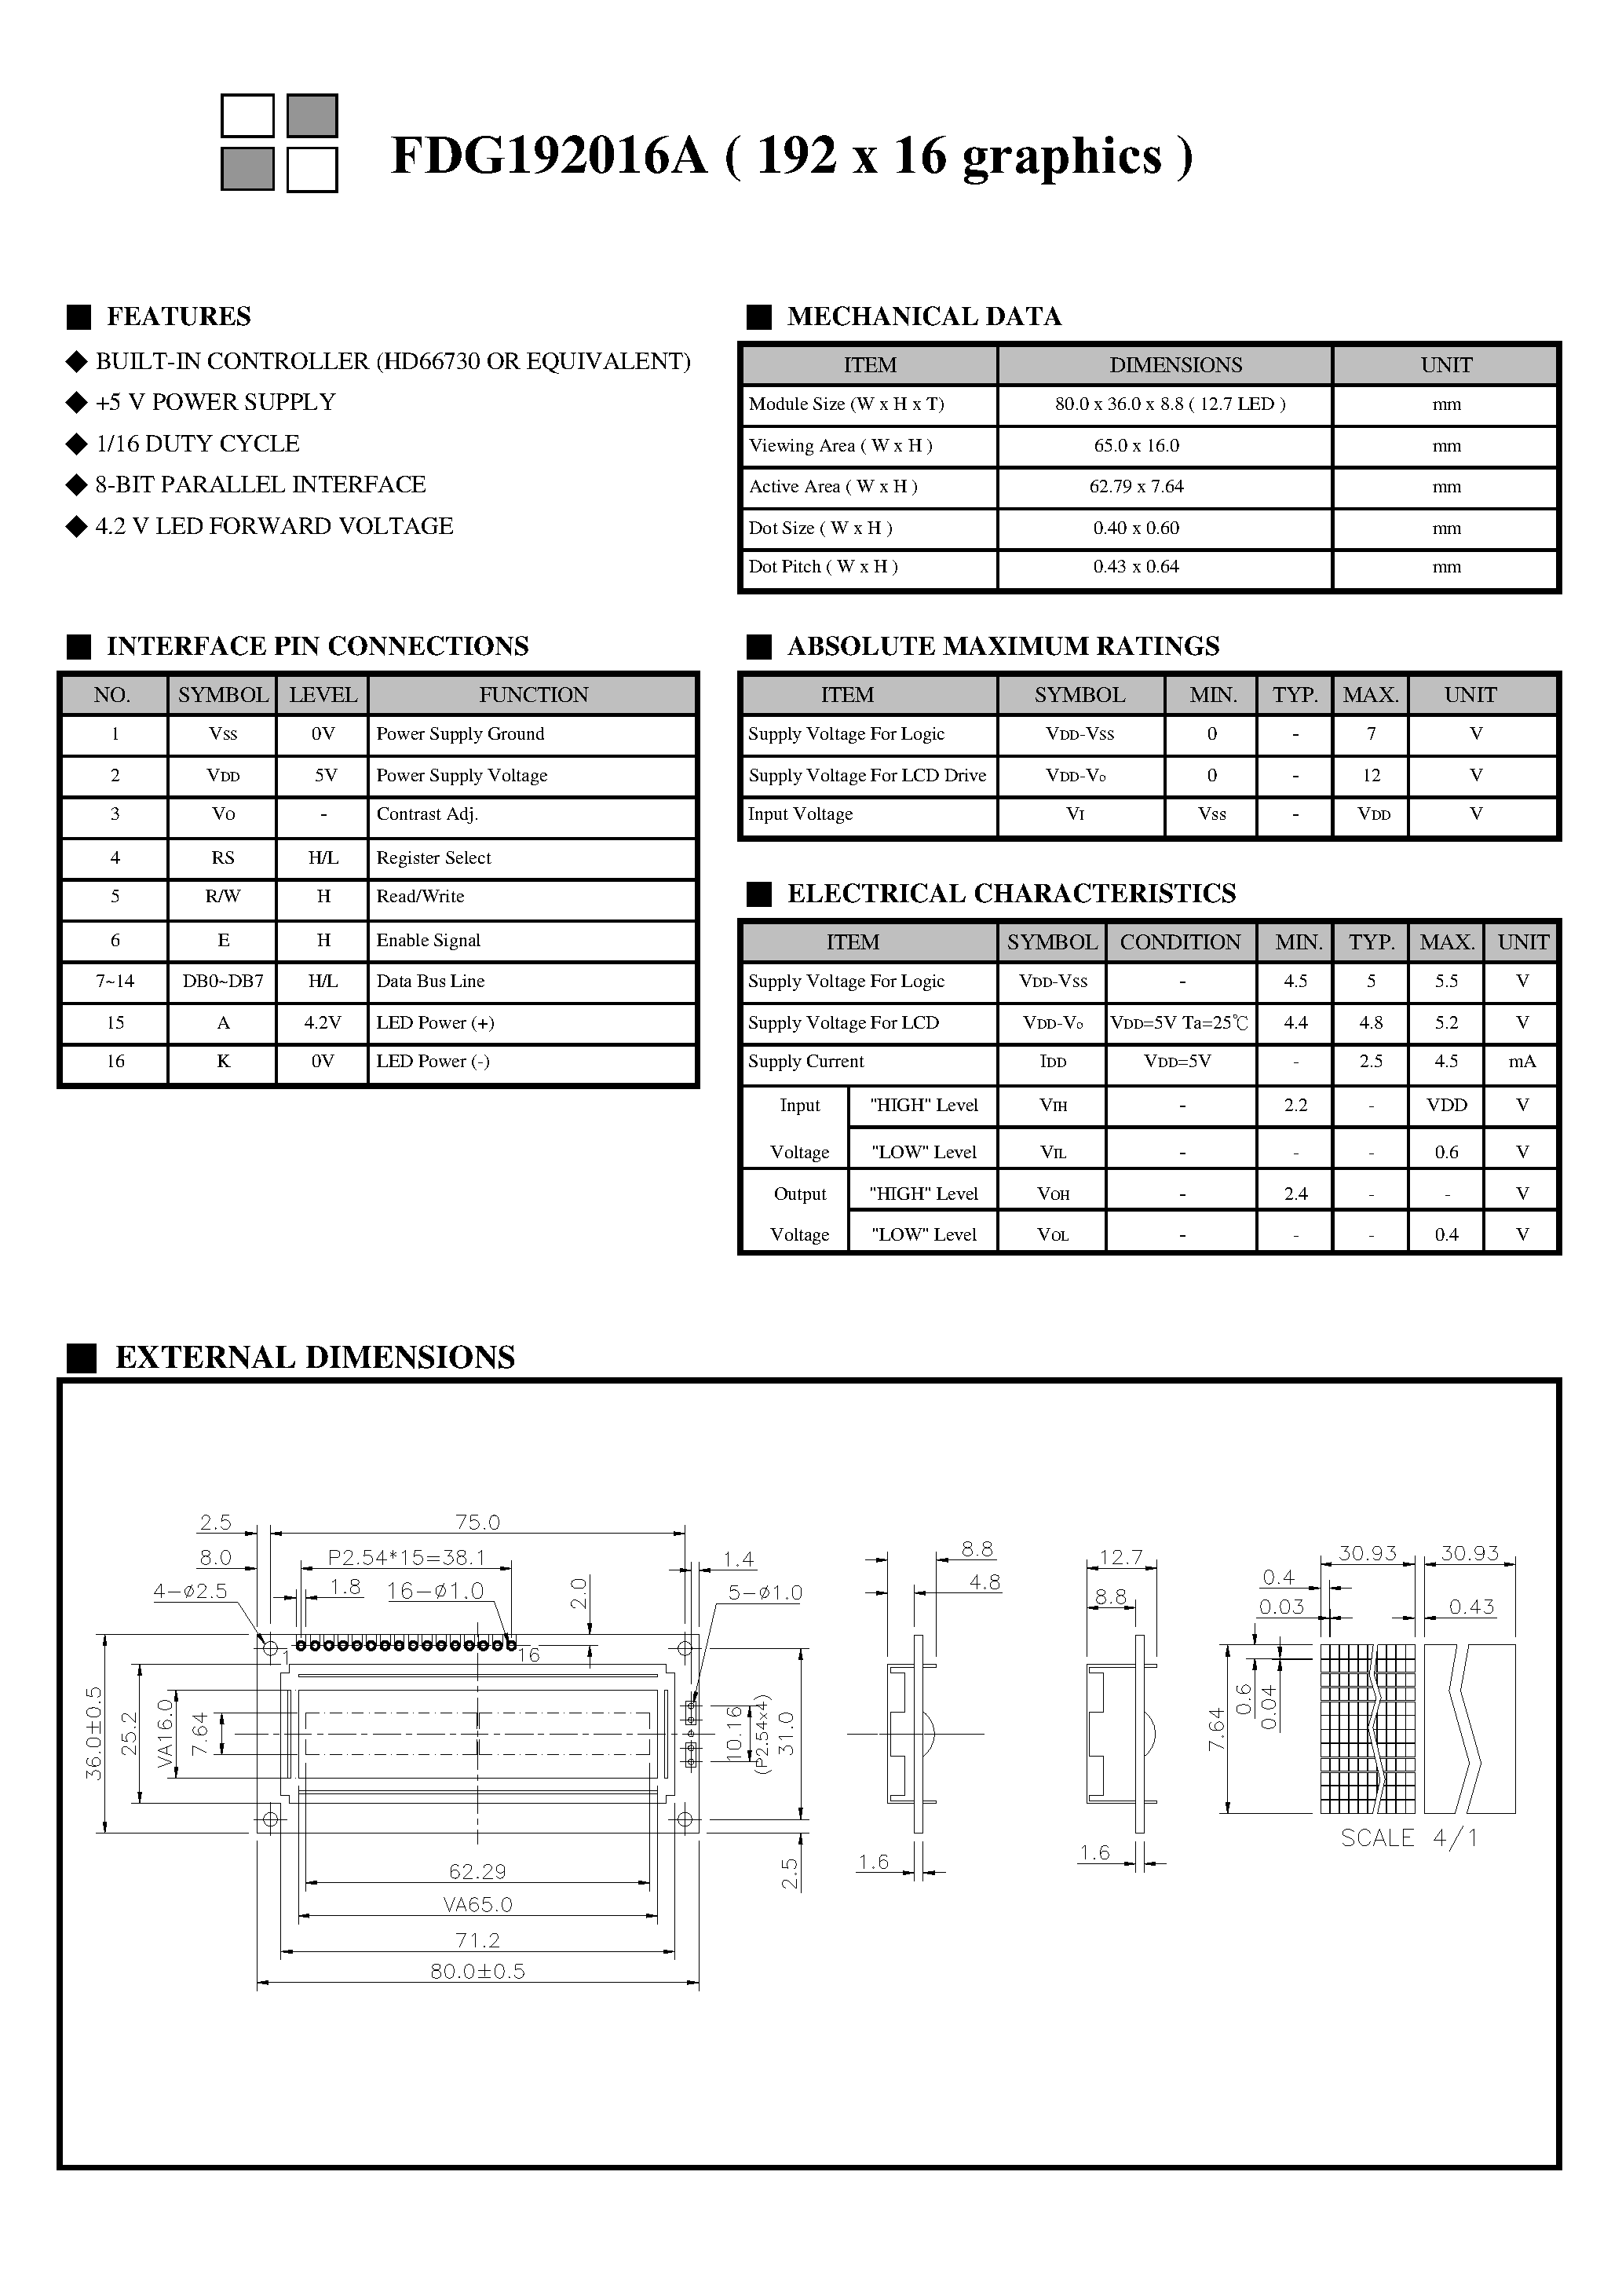 Datasheet FDG192016A - Monochrome Lcd Module page 2